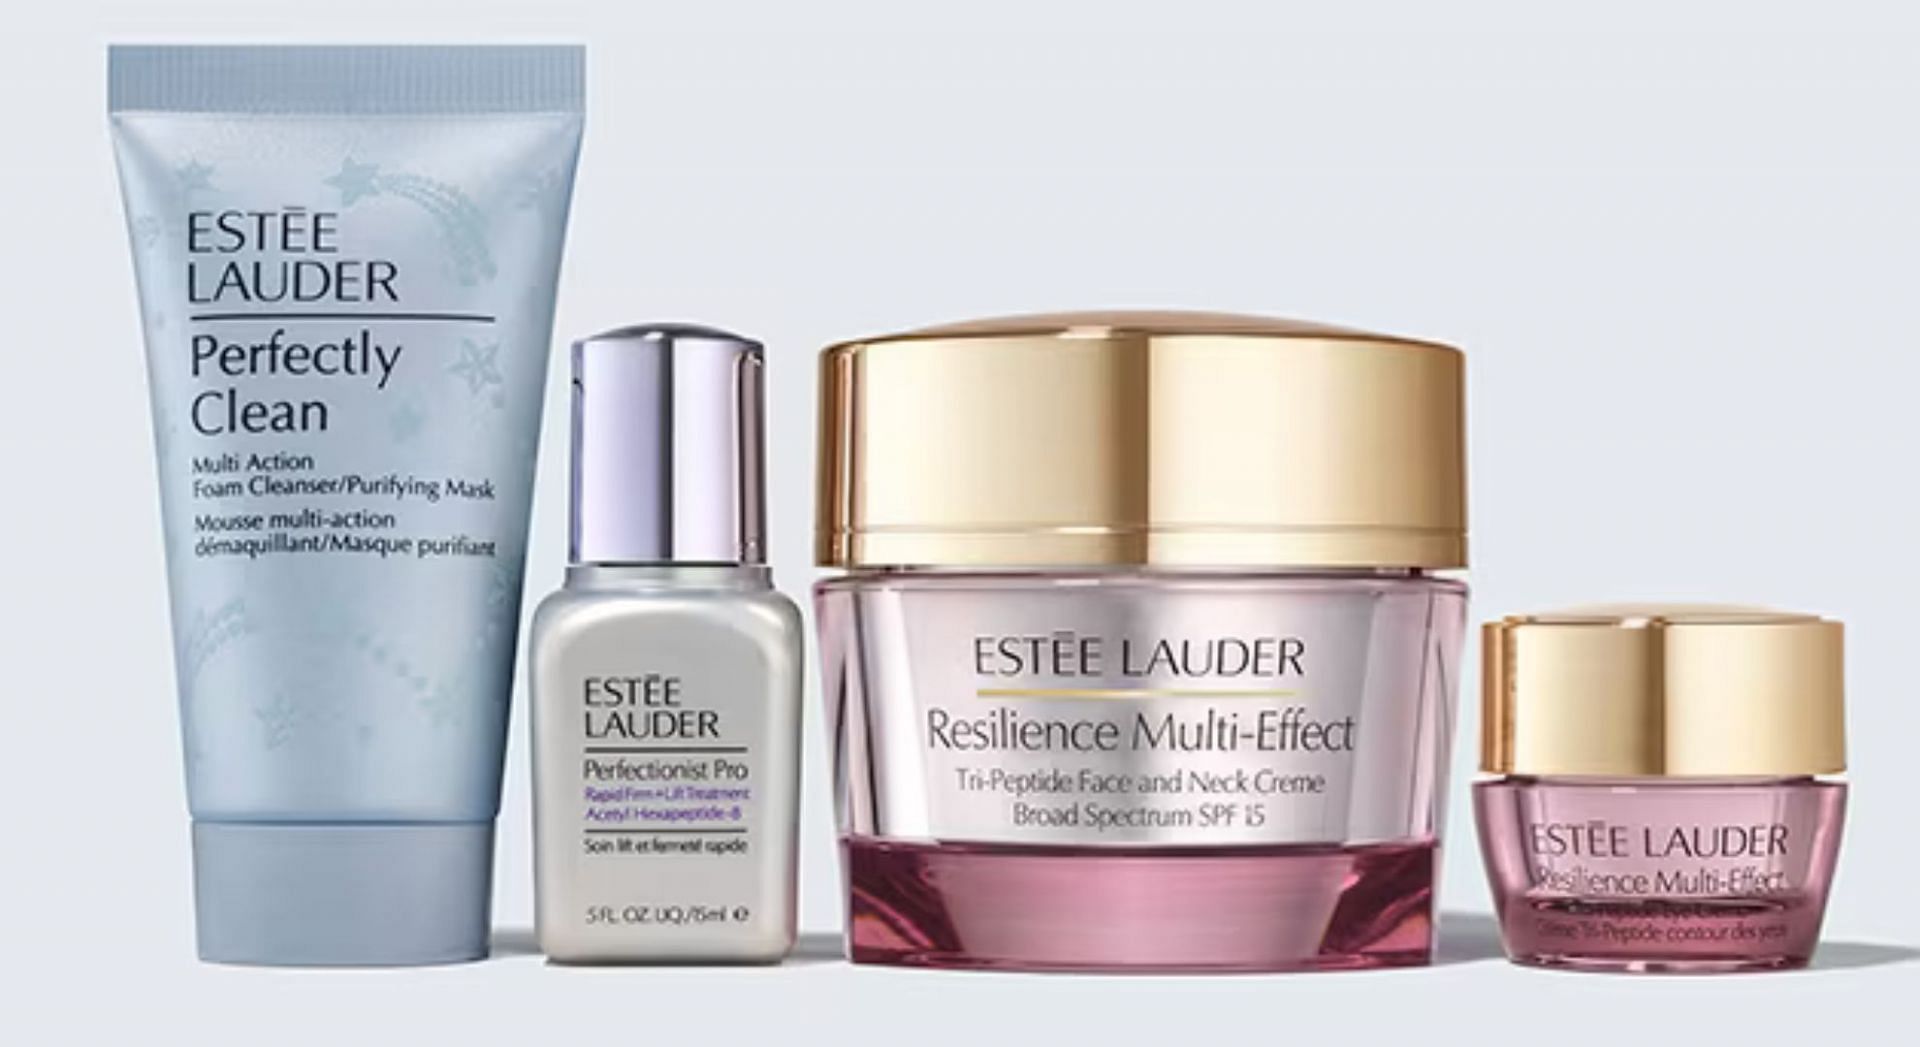 Est&eacute;e Lauder Resilience Moisturizer Holiday Skincare Set The Radiance Routine (Image via Est&eacute;e Lauder)